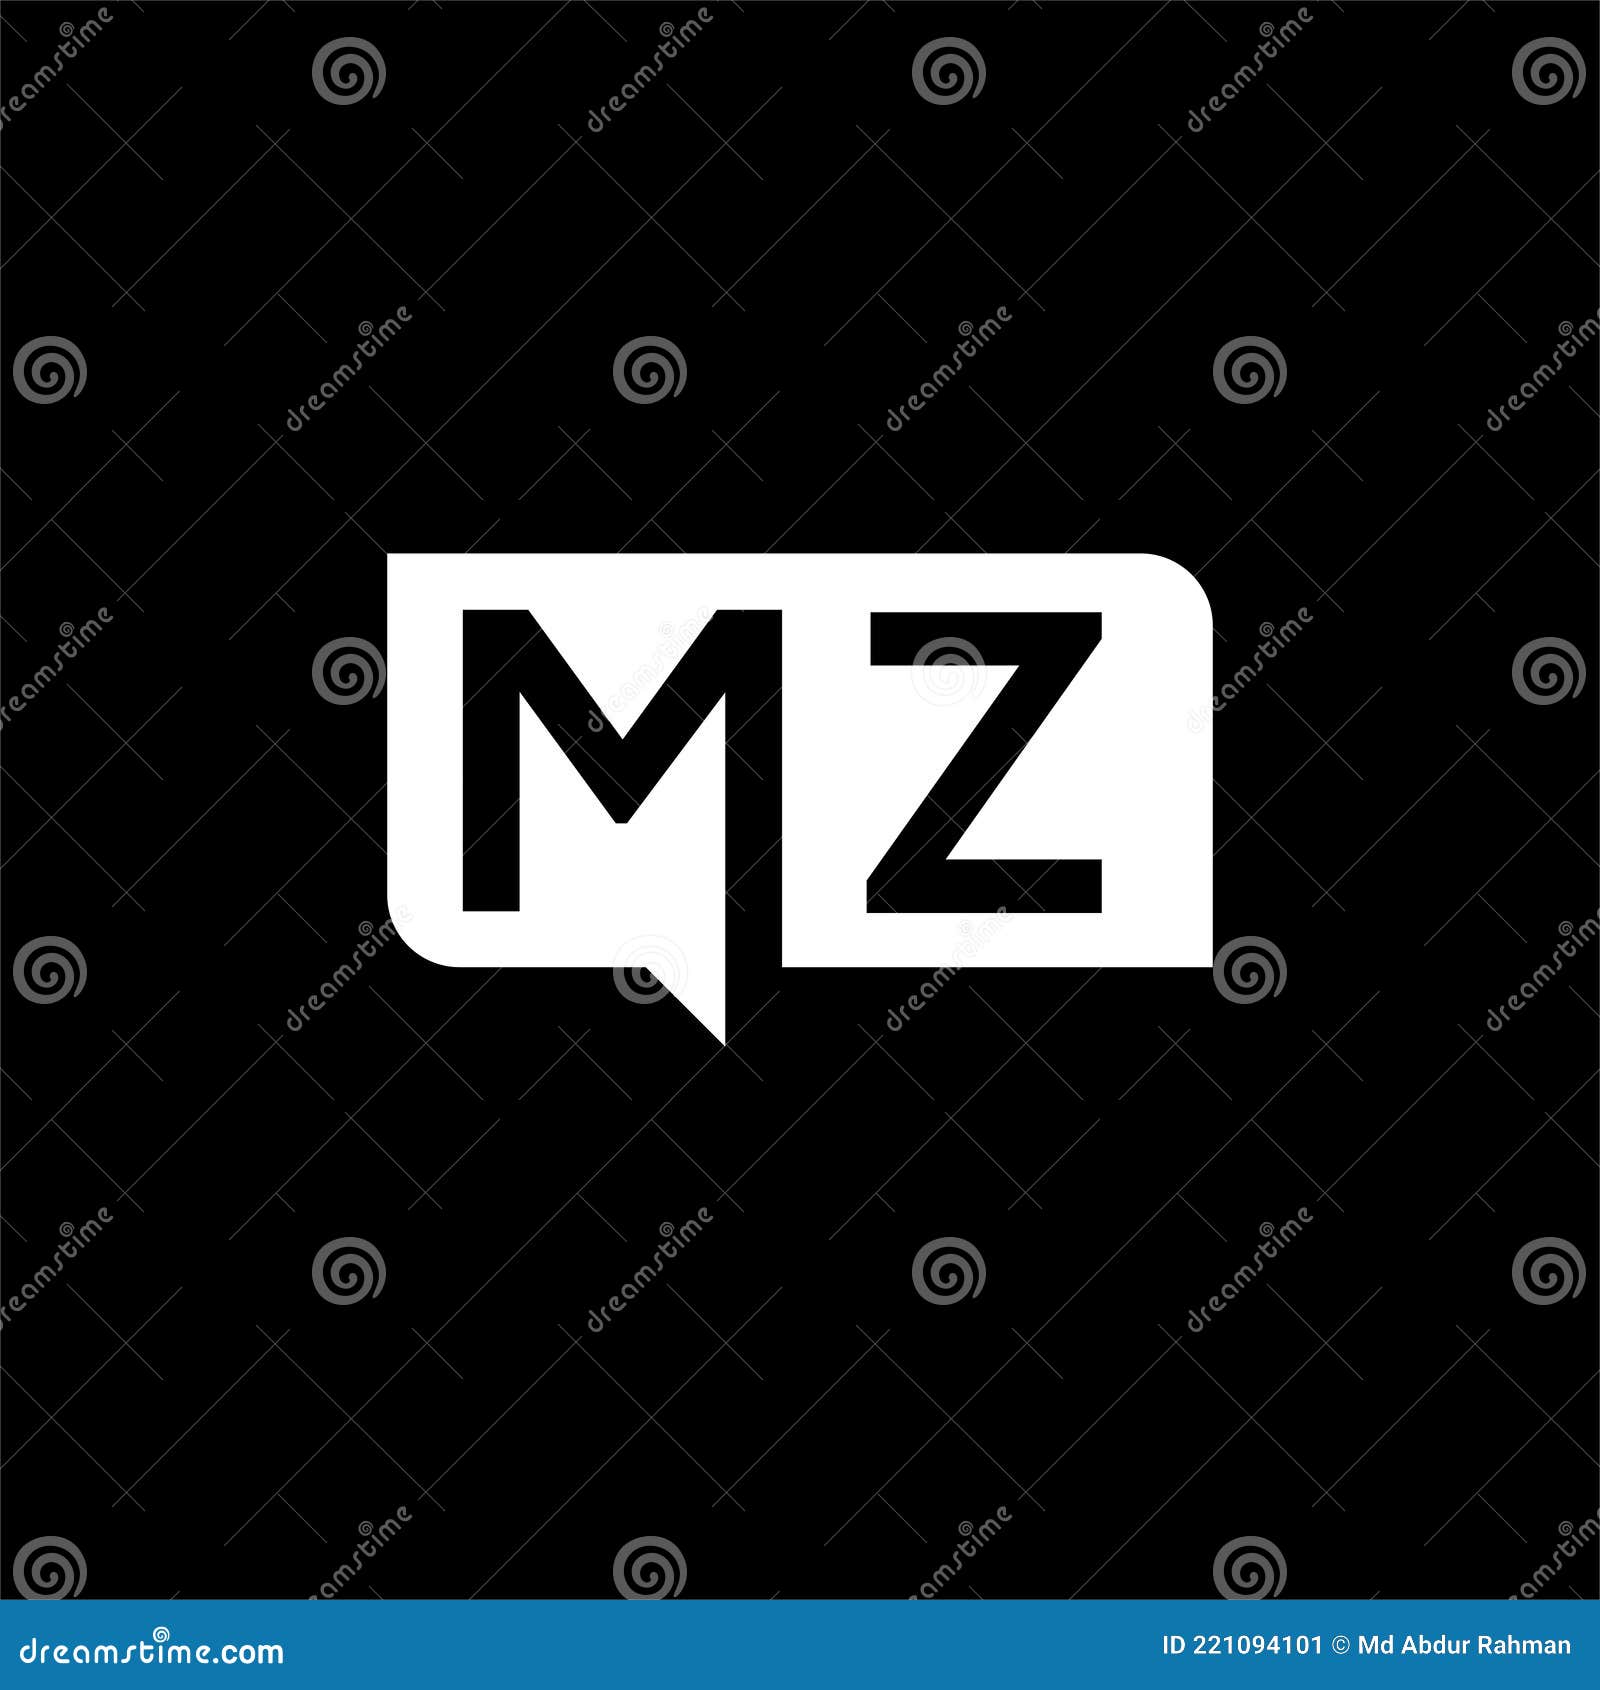 MZ Letter Logo Design on Black Background.MZ Creative Initials Letter ...